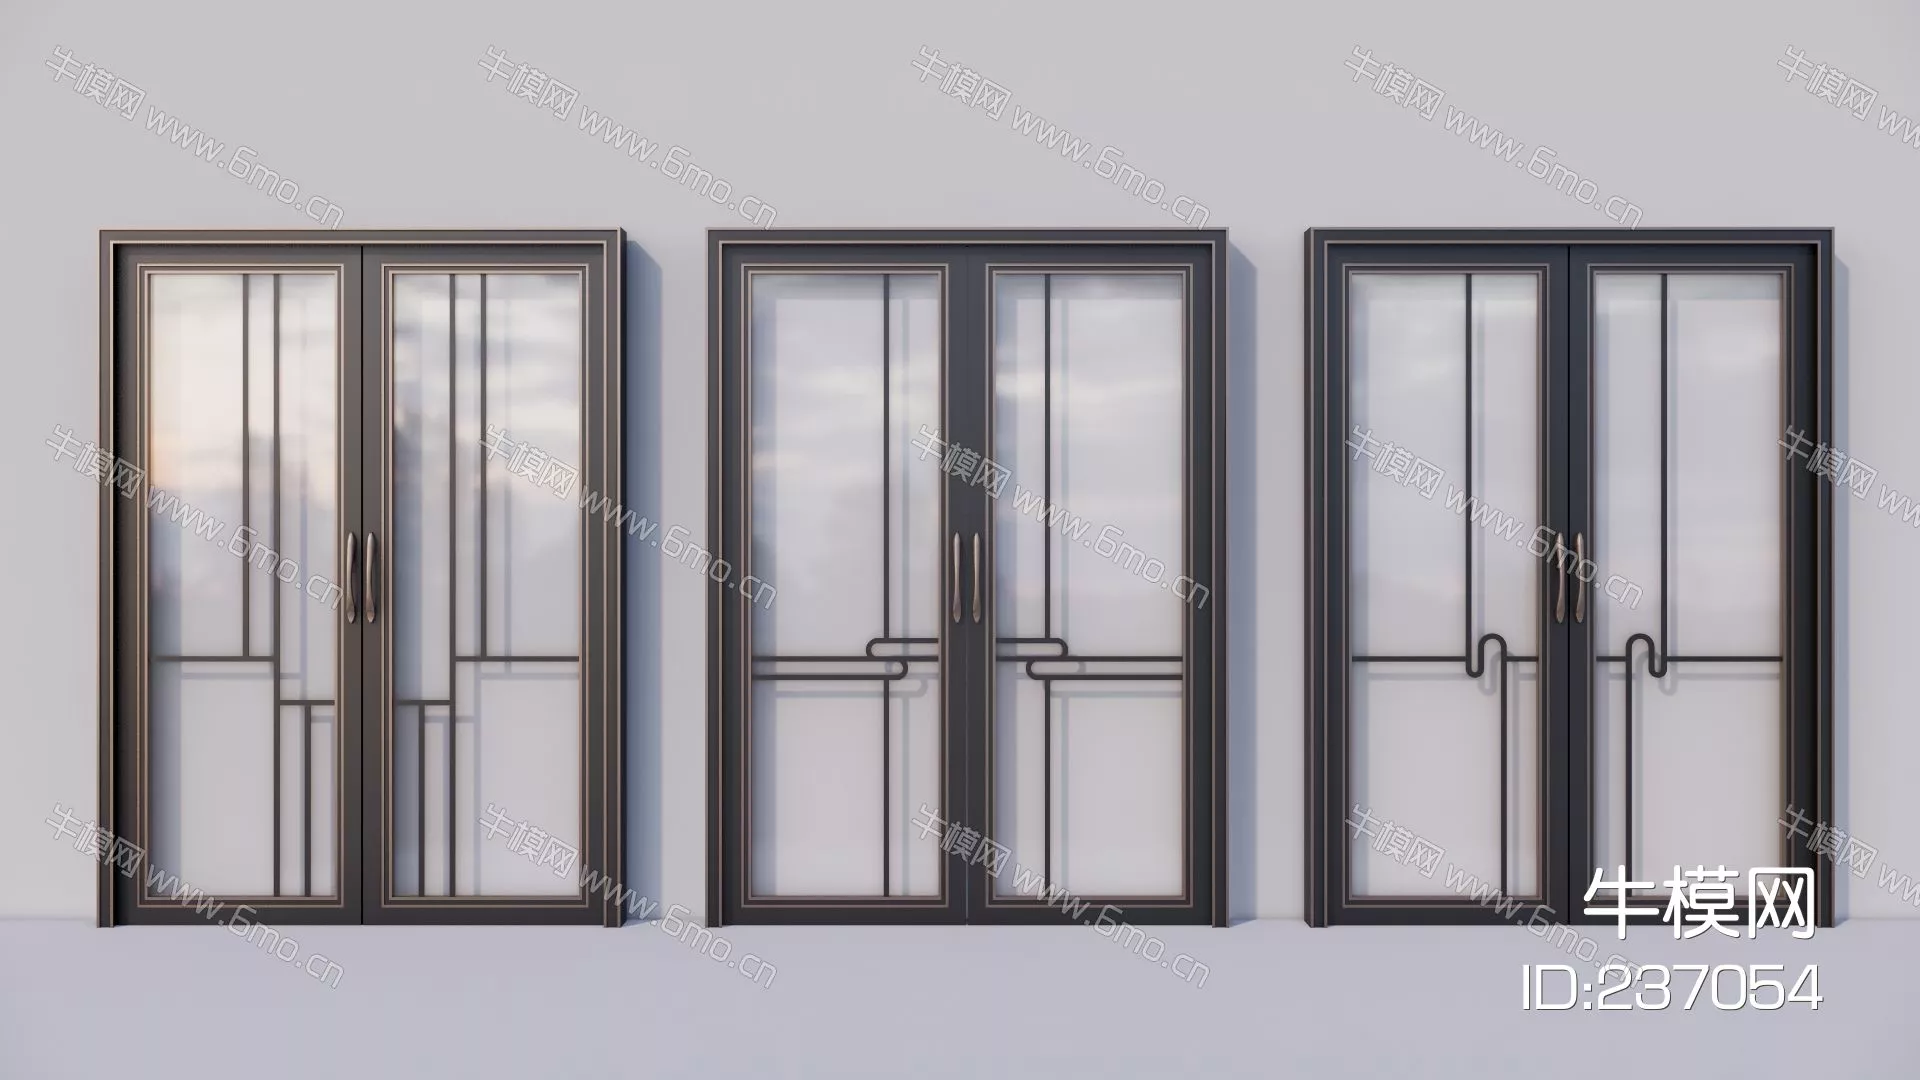 MODERN DOOR AND WINDOWS - SKETCHUP 3D MODEL - ENSCAPE - 237054